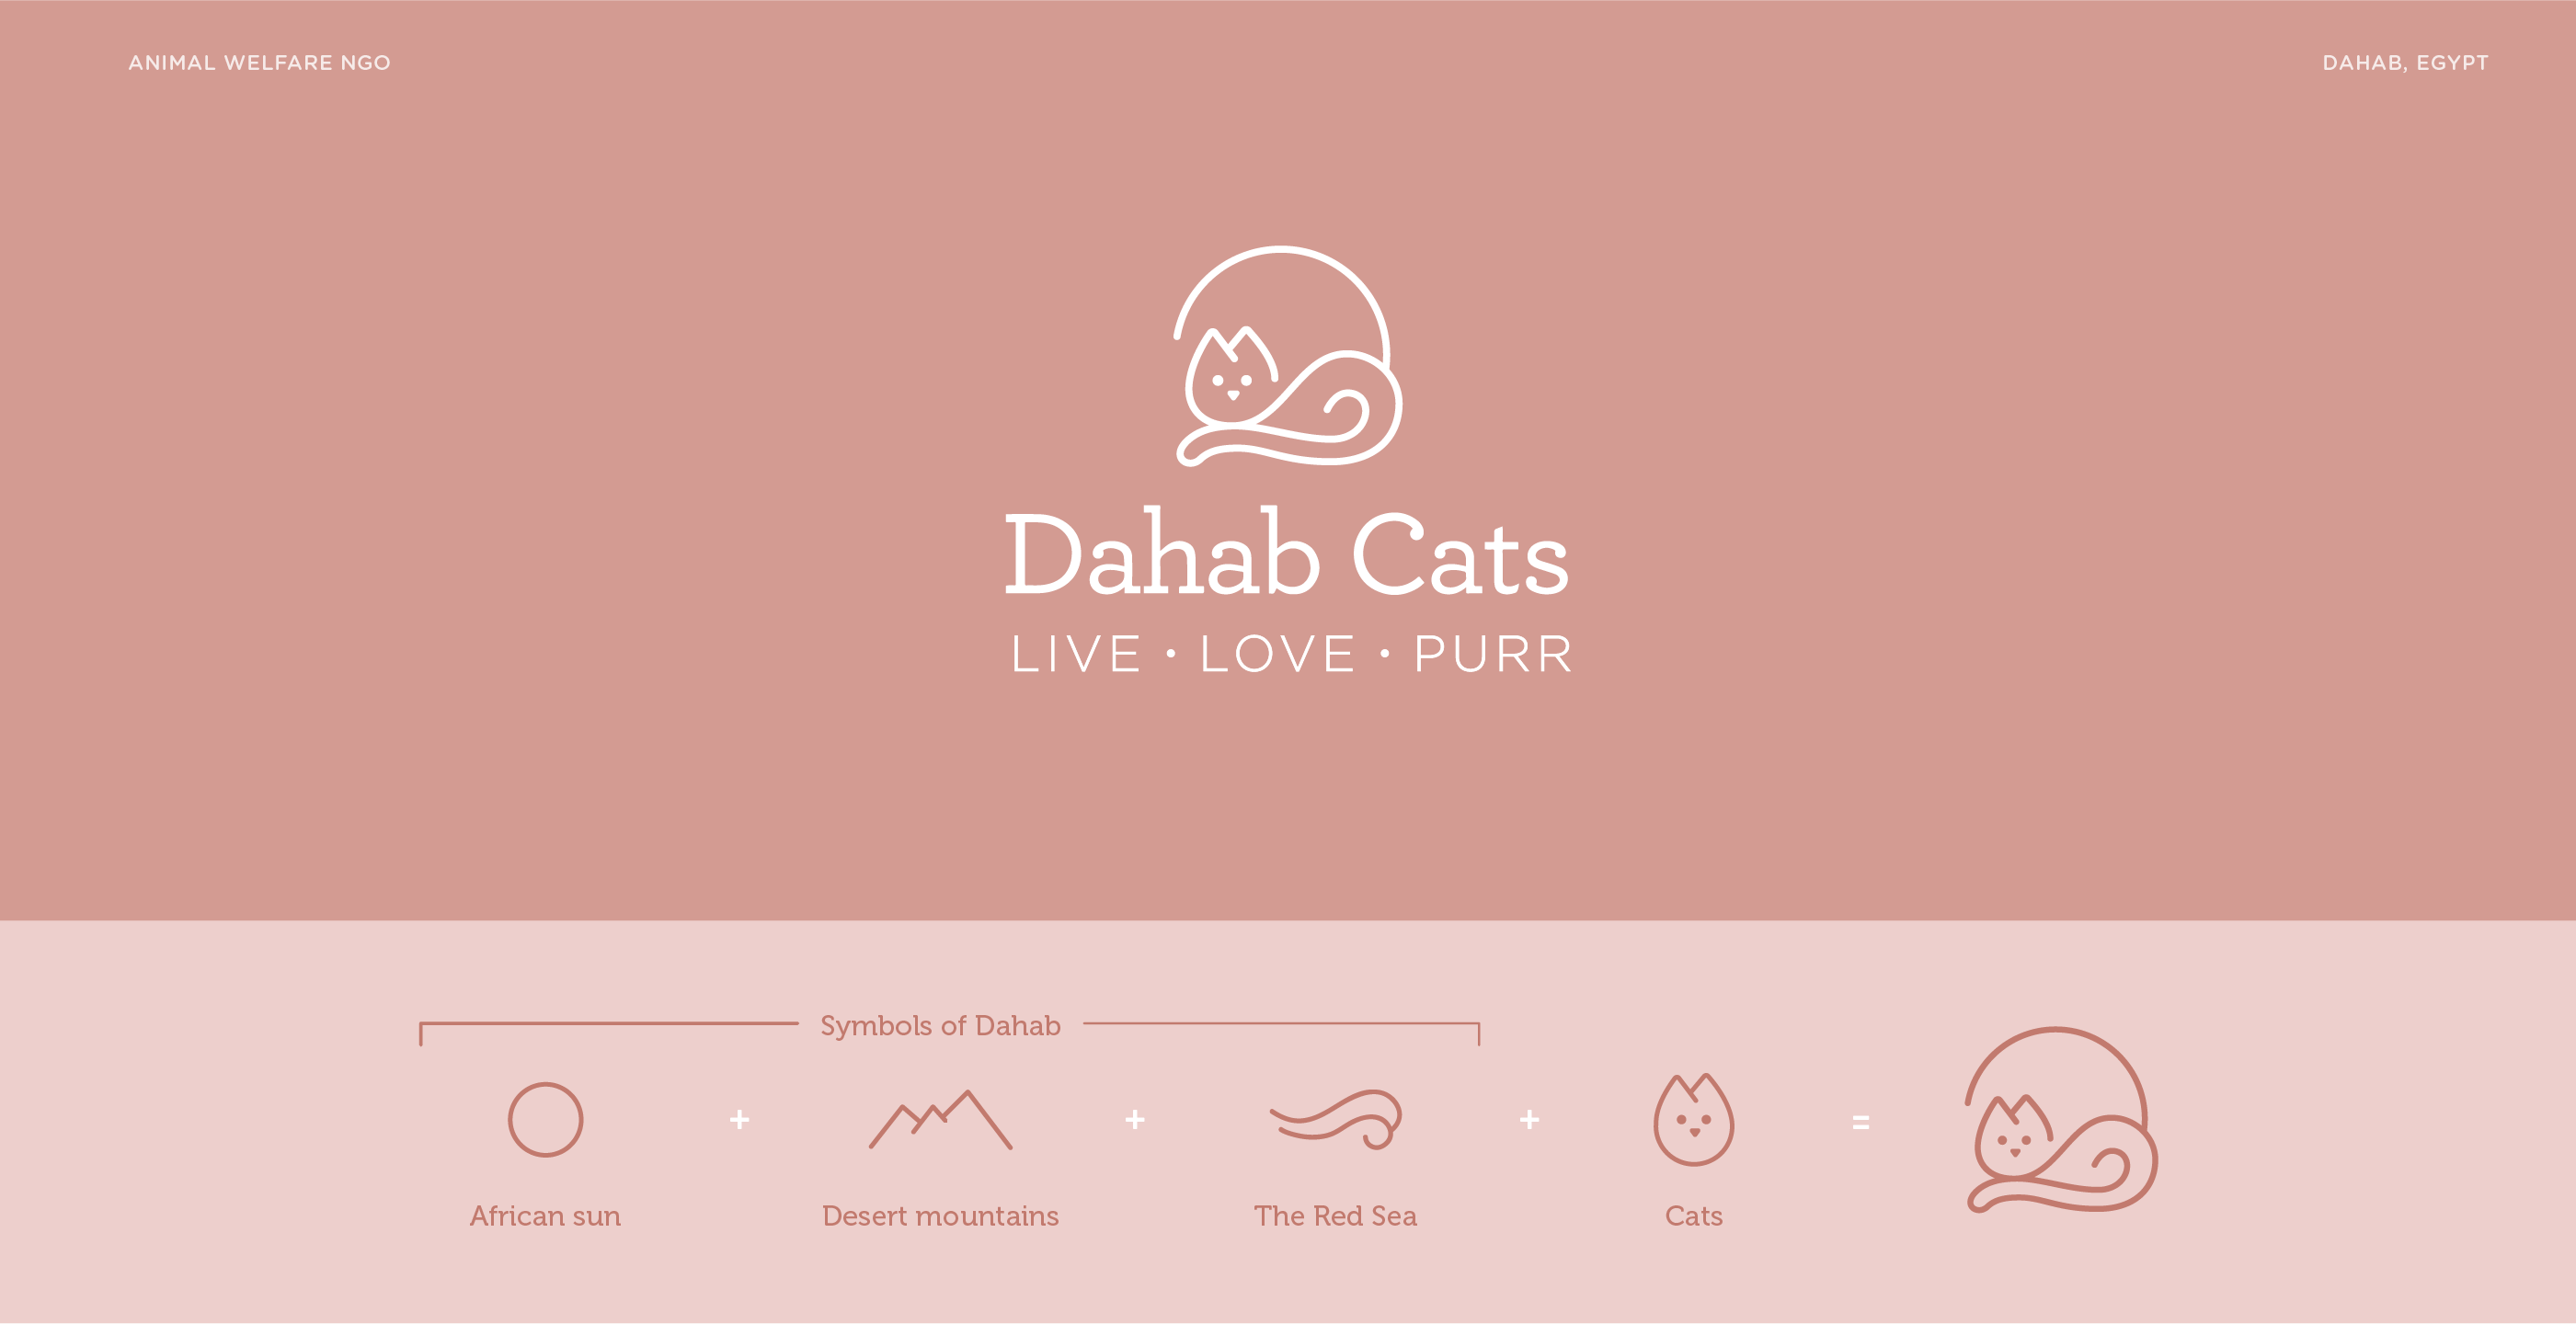 Dahab Cats – animal welfare